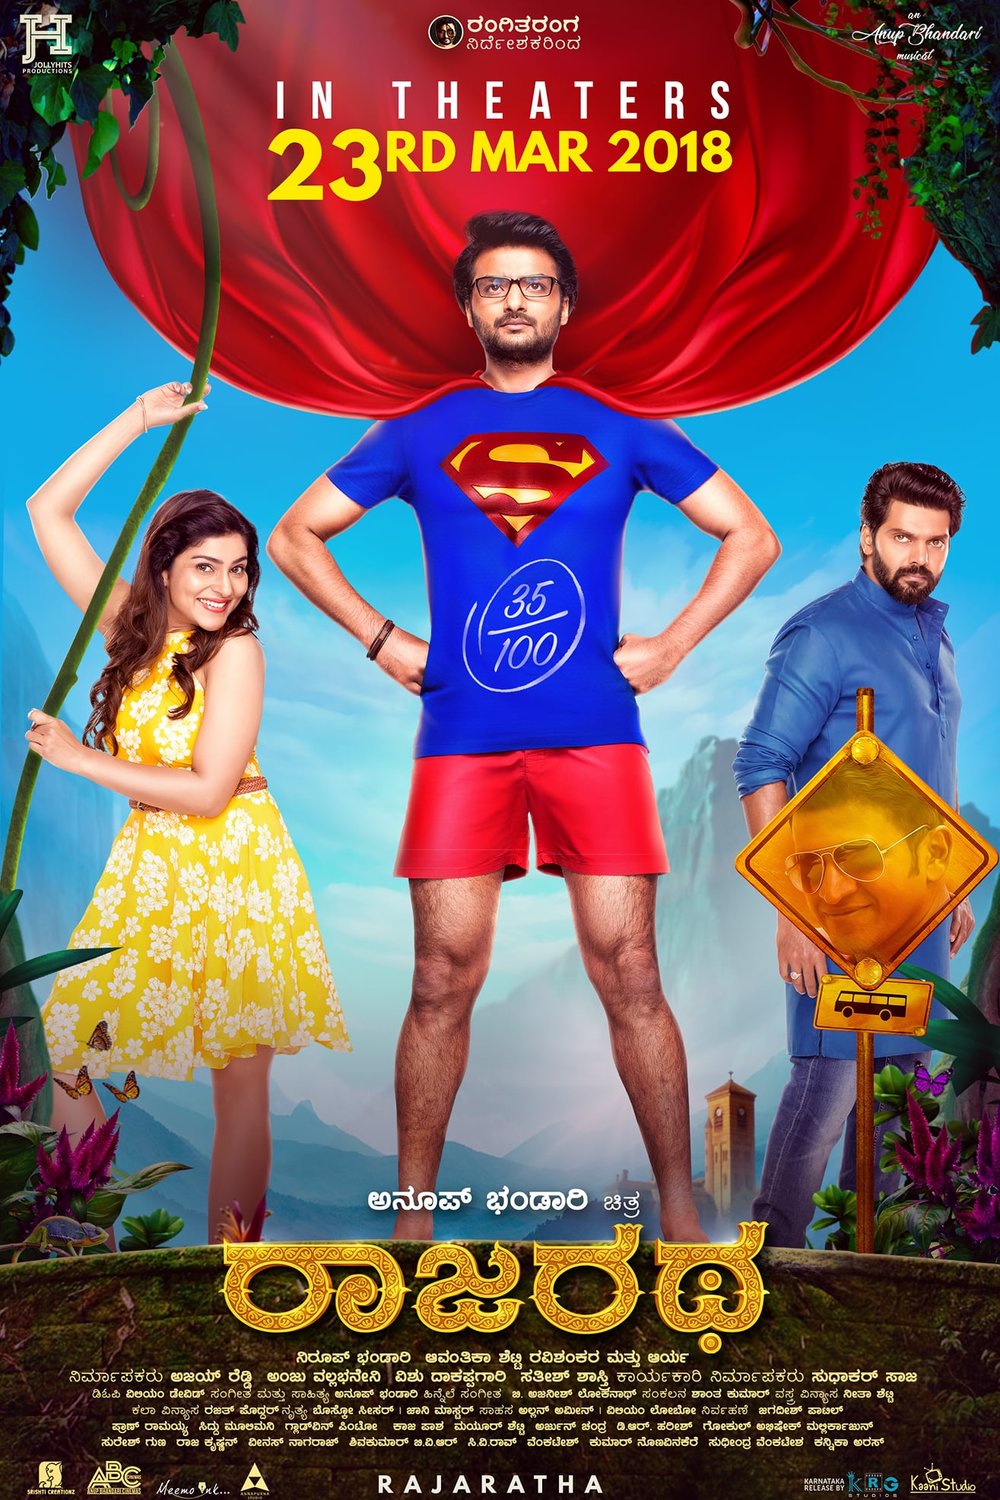 Kannada poster of the movie Rajaratha